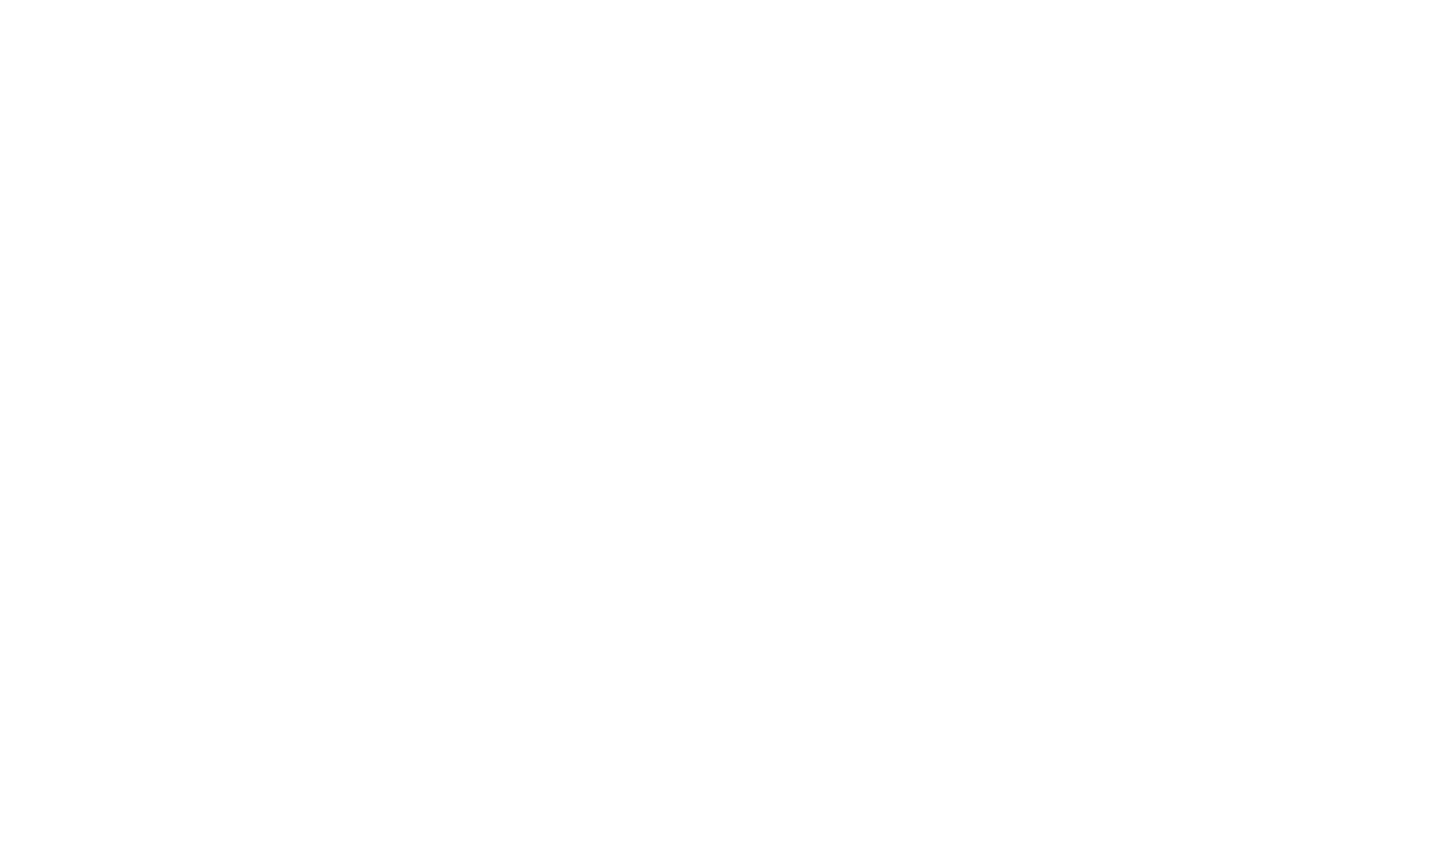 StoneCo logo for dark backgrounds (transparent PNG)